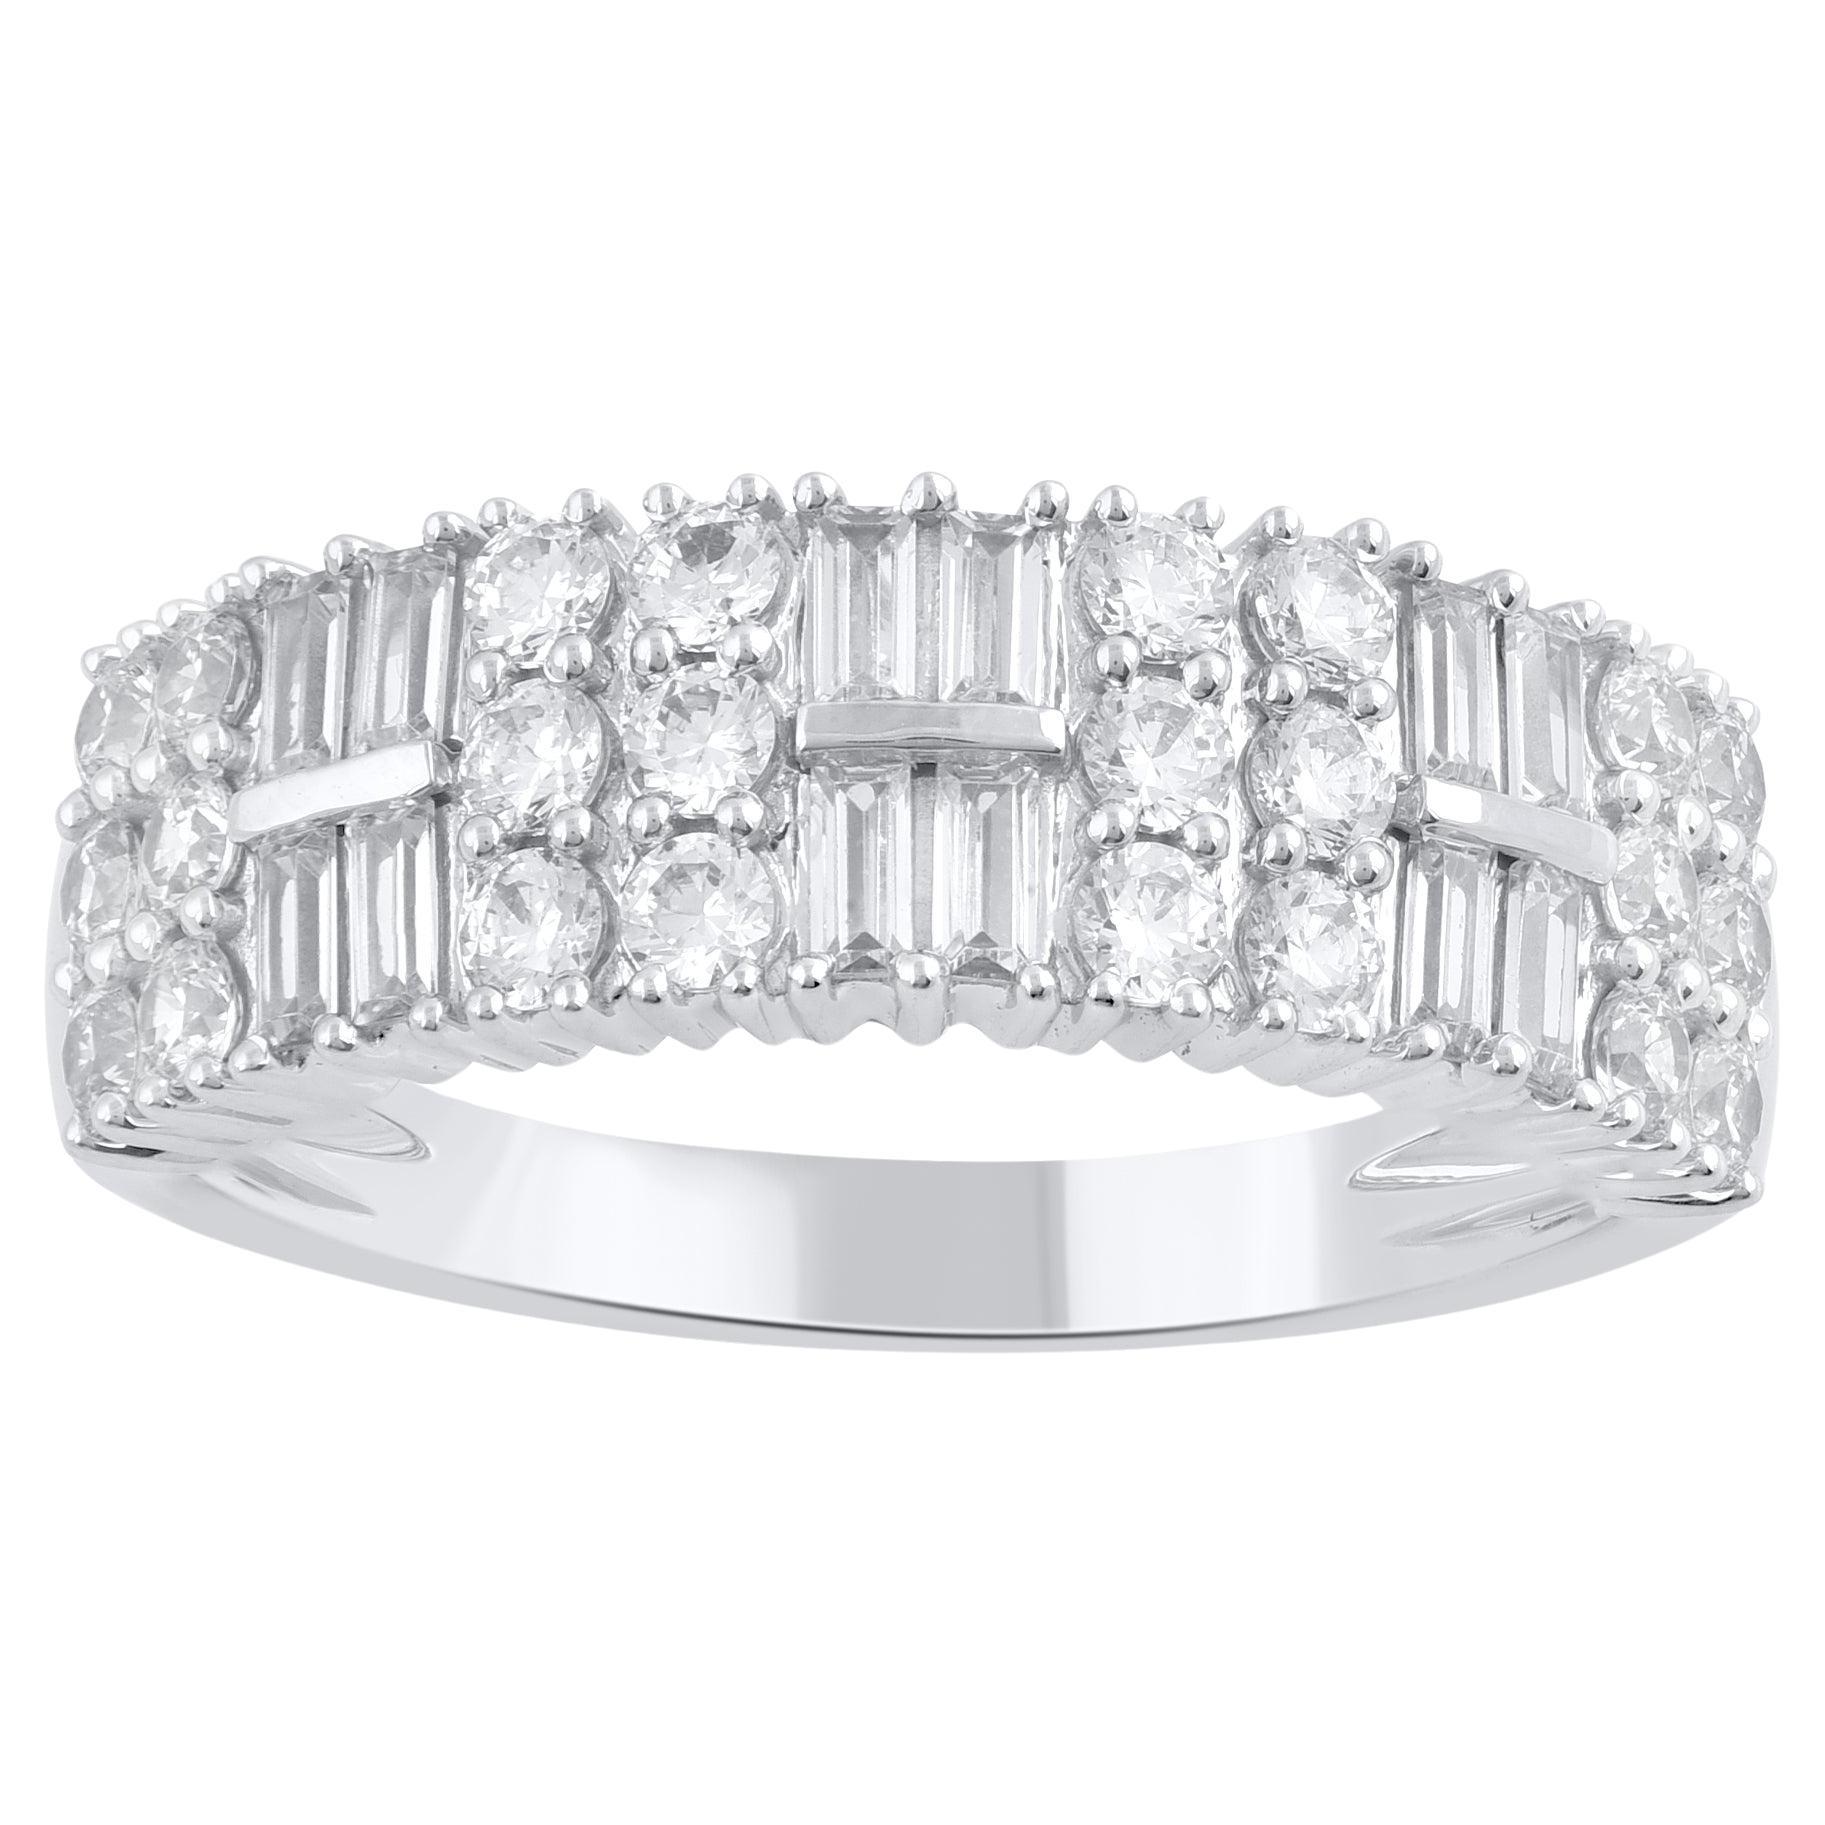 TJD 1.0 Carat Brilliant Cut & Baguette Diamond 18KT White Gold Wedding Band Ring For Sale